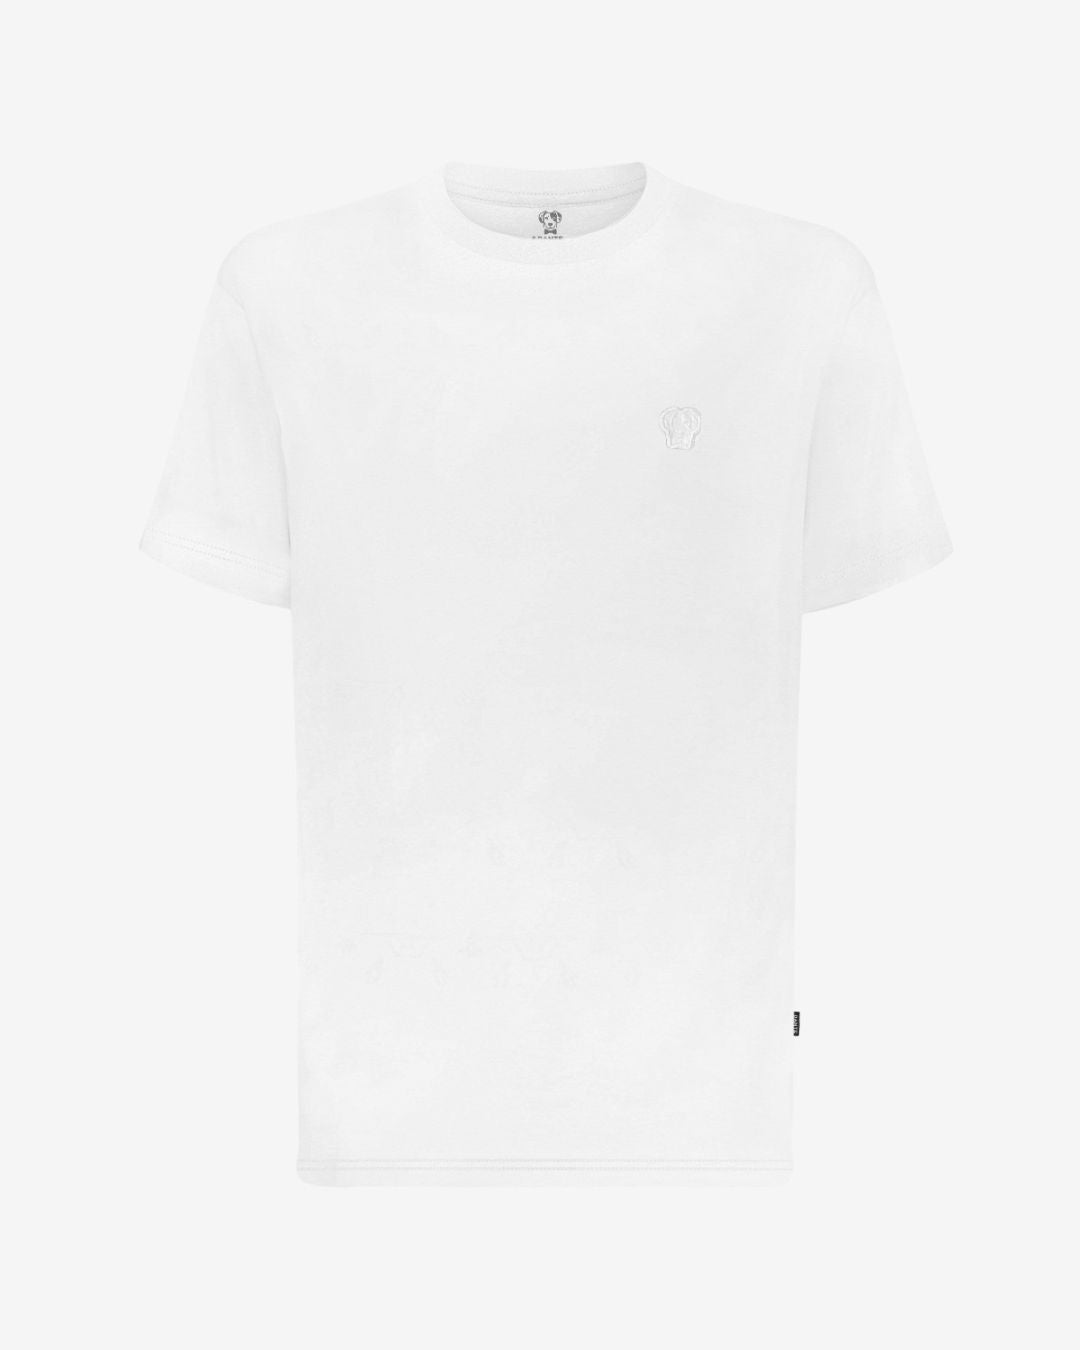 Camiseta Antimanchas Blanca logo Blanco